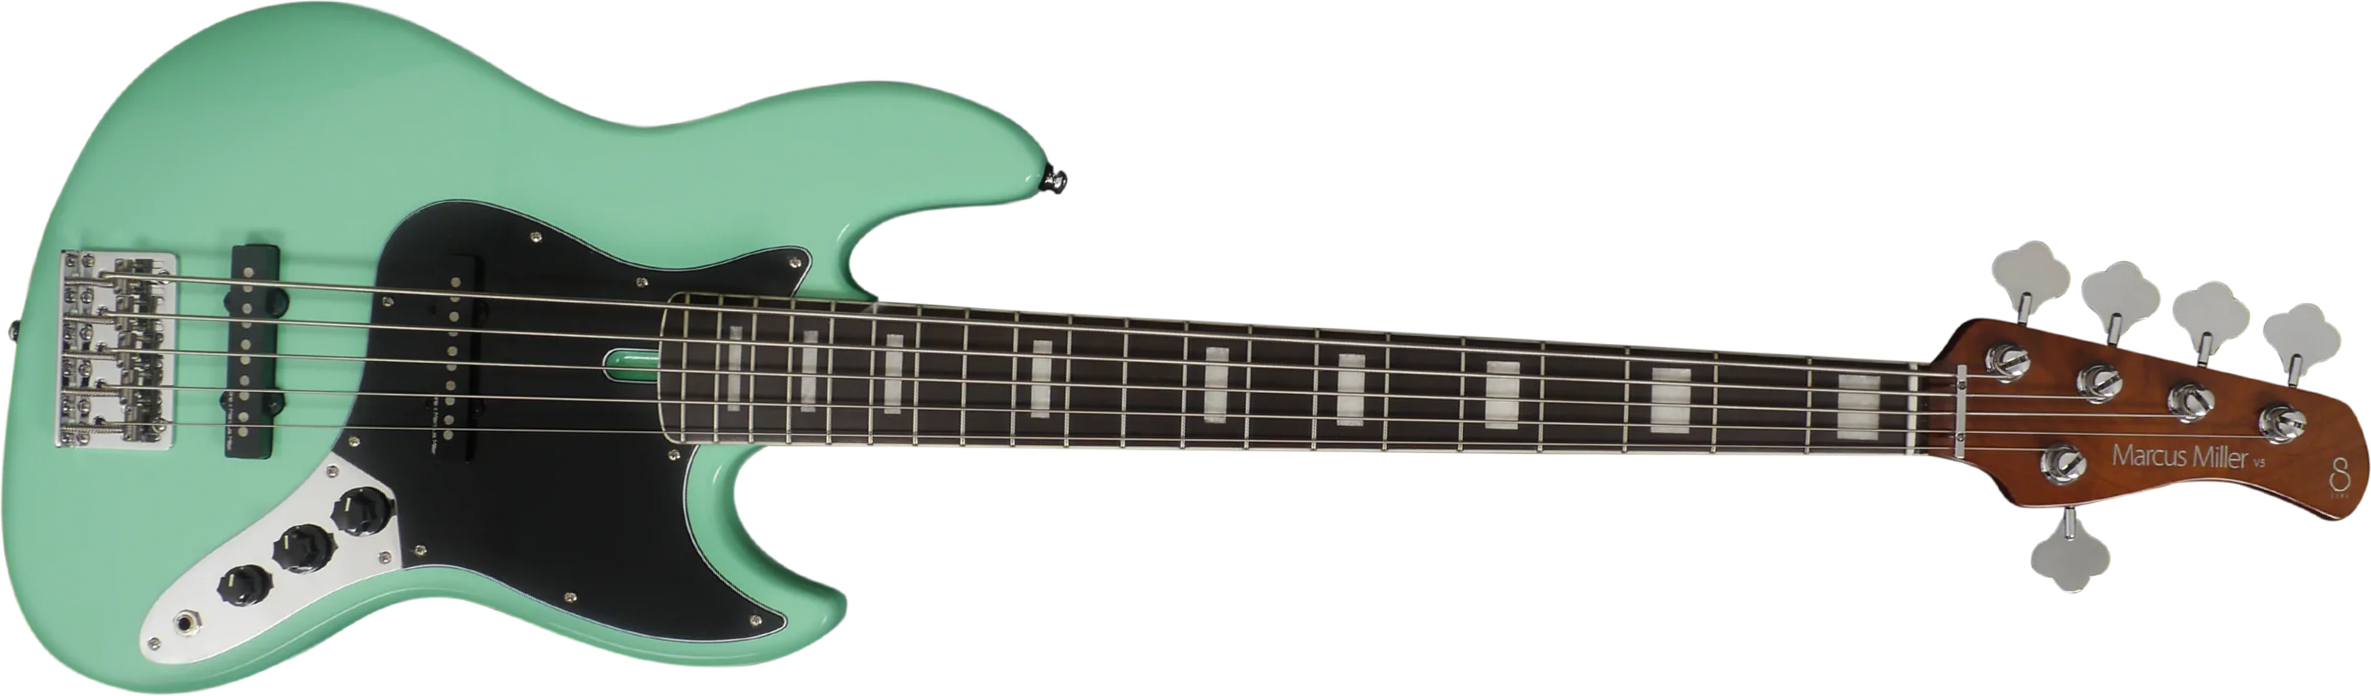 Marcus Miller V5r 5st 5c Rw - Mild Green - Solid body elektrische bas - Main picture